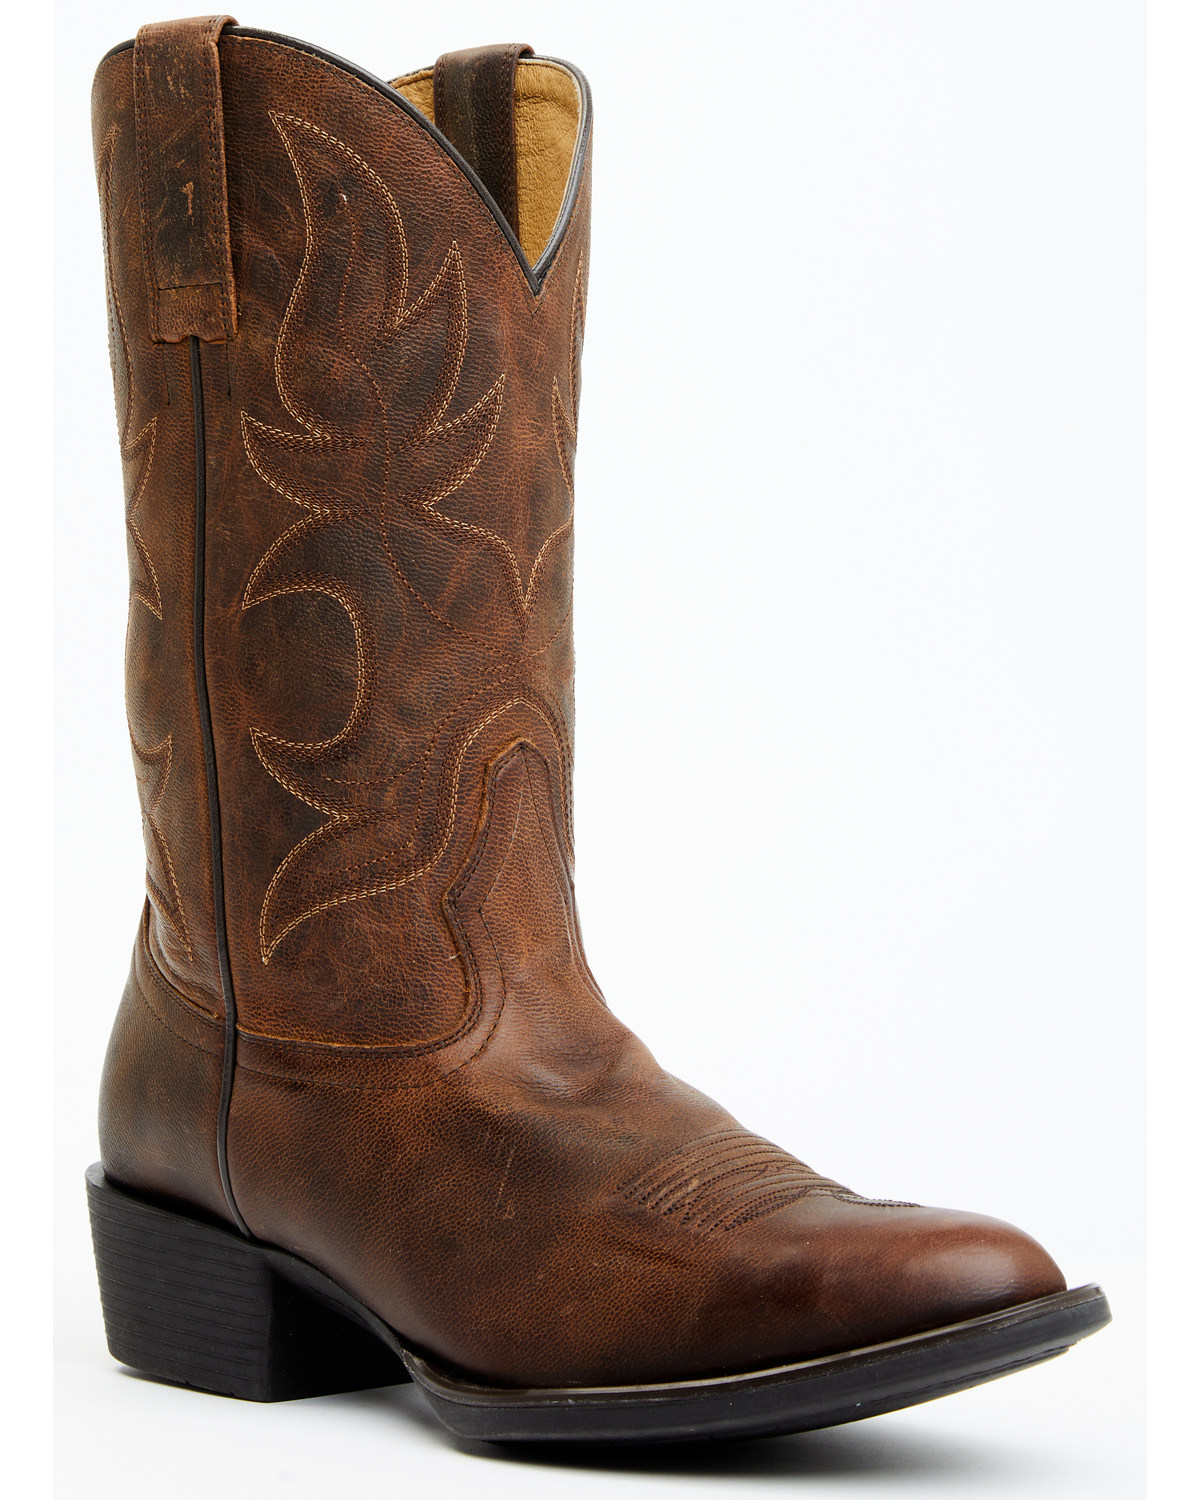 Cody James Men's Larsen Performance Western Boots - Medium Toe